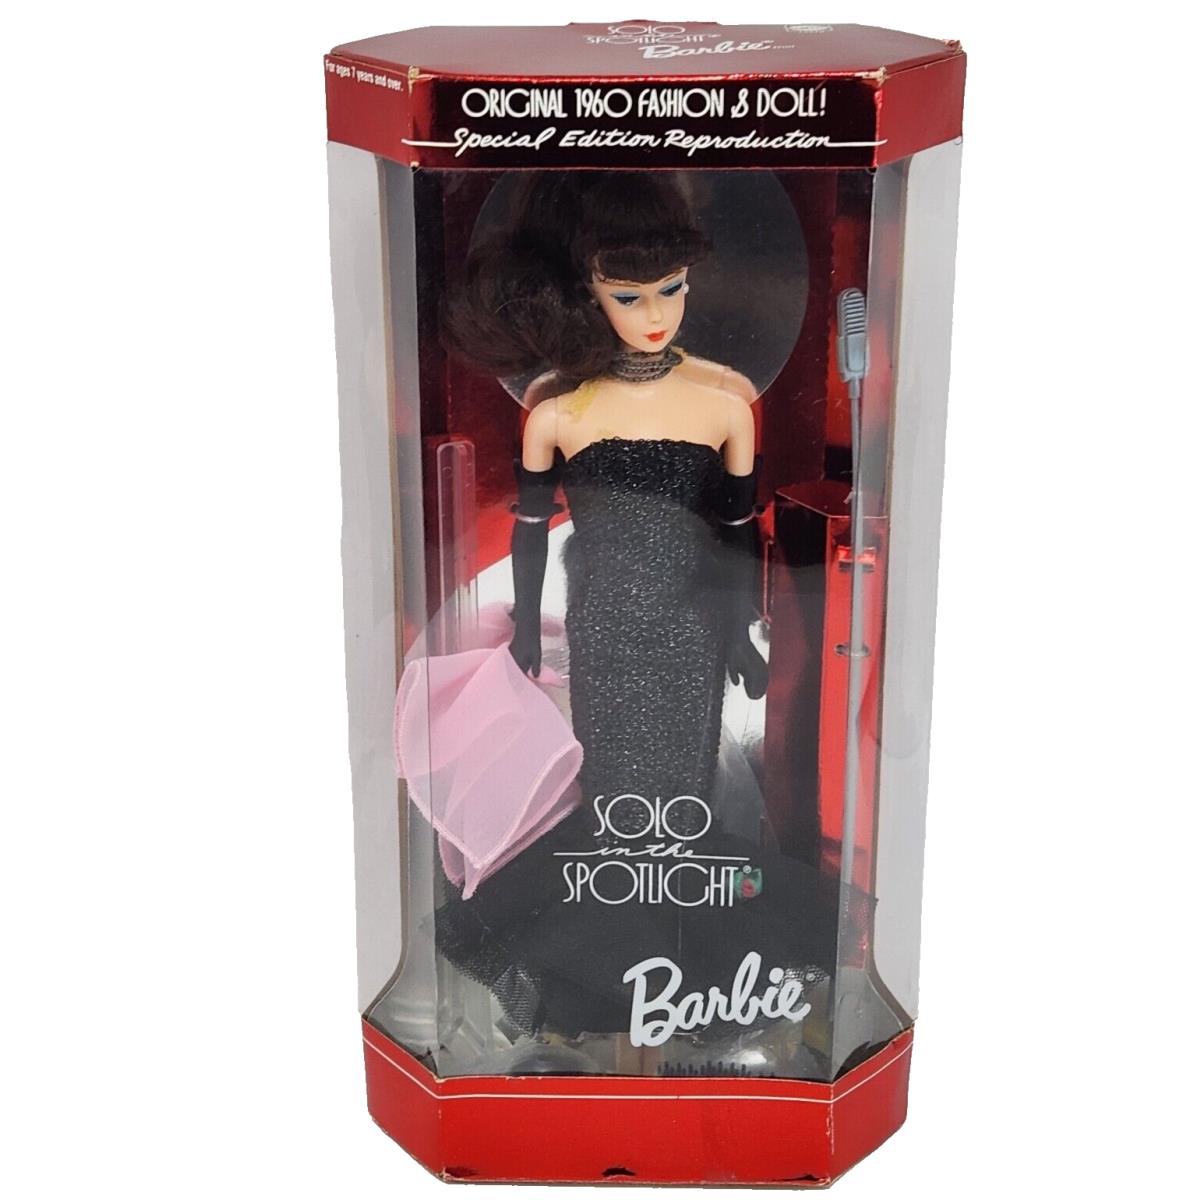 Vintage 1994 Solo IN The Spotlight Barbie Doll 13820 Mattel Repro